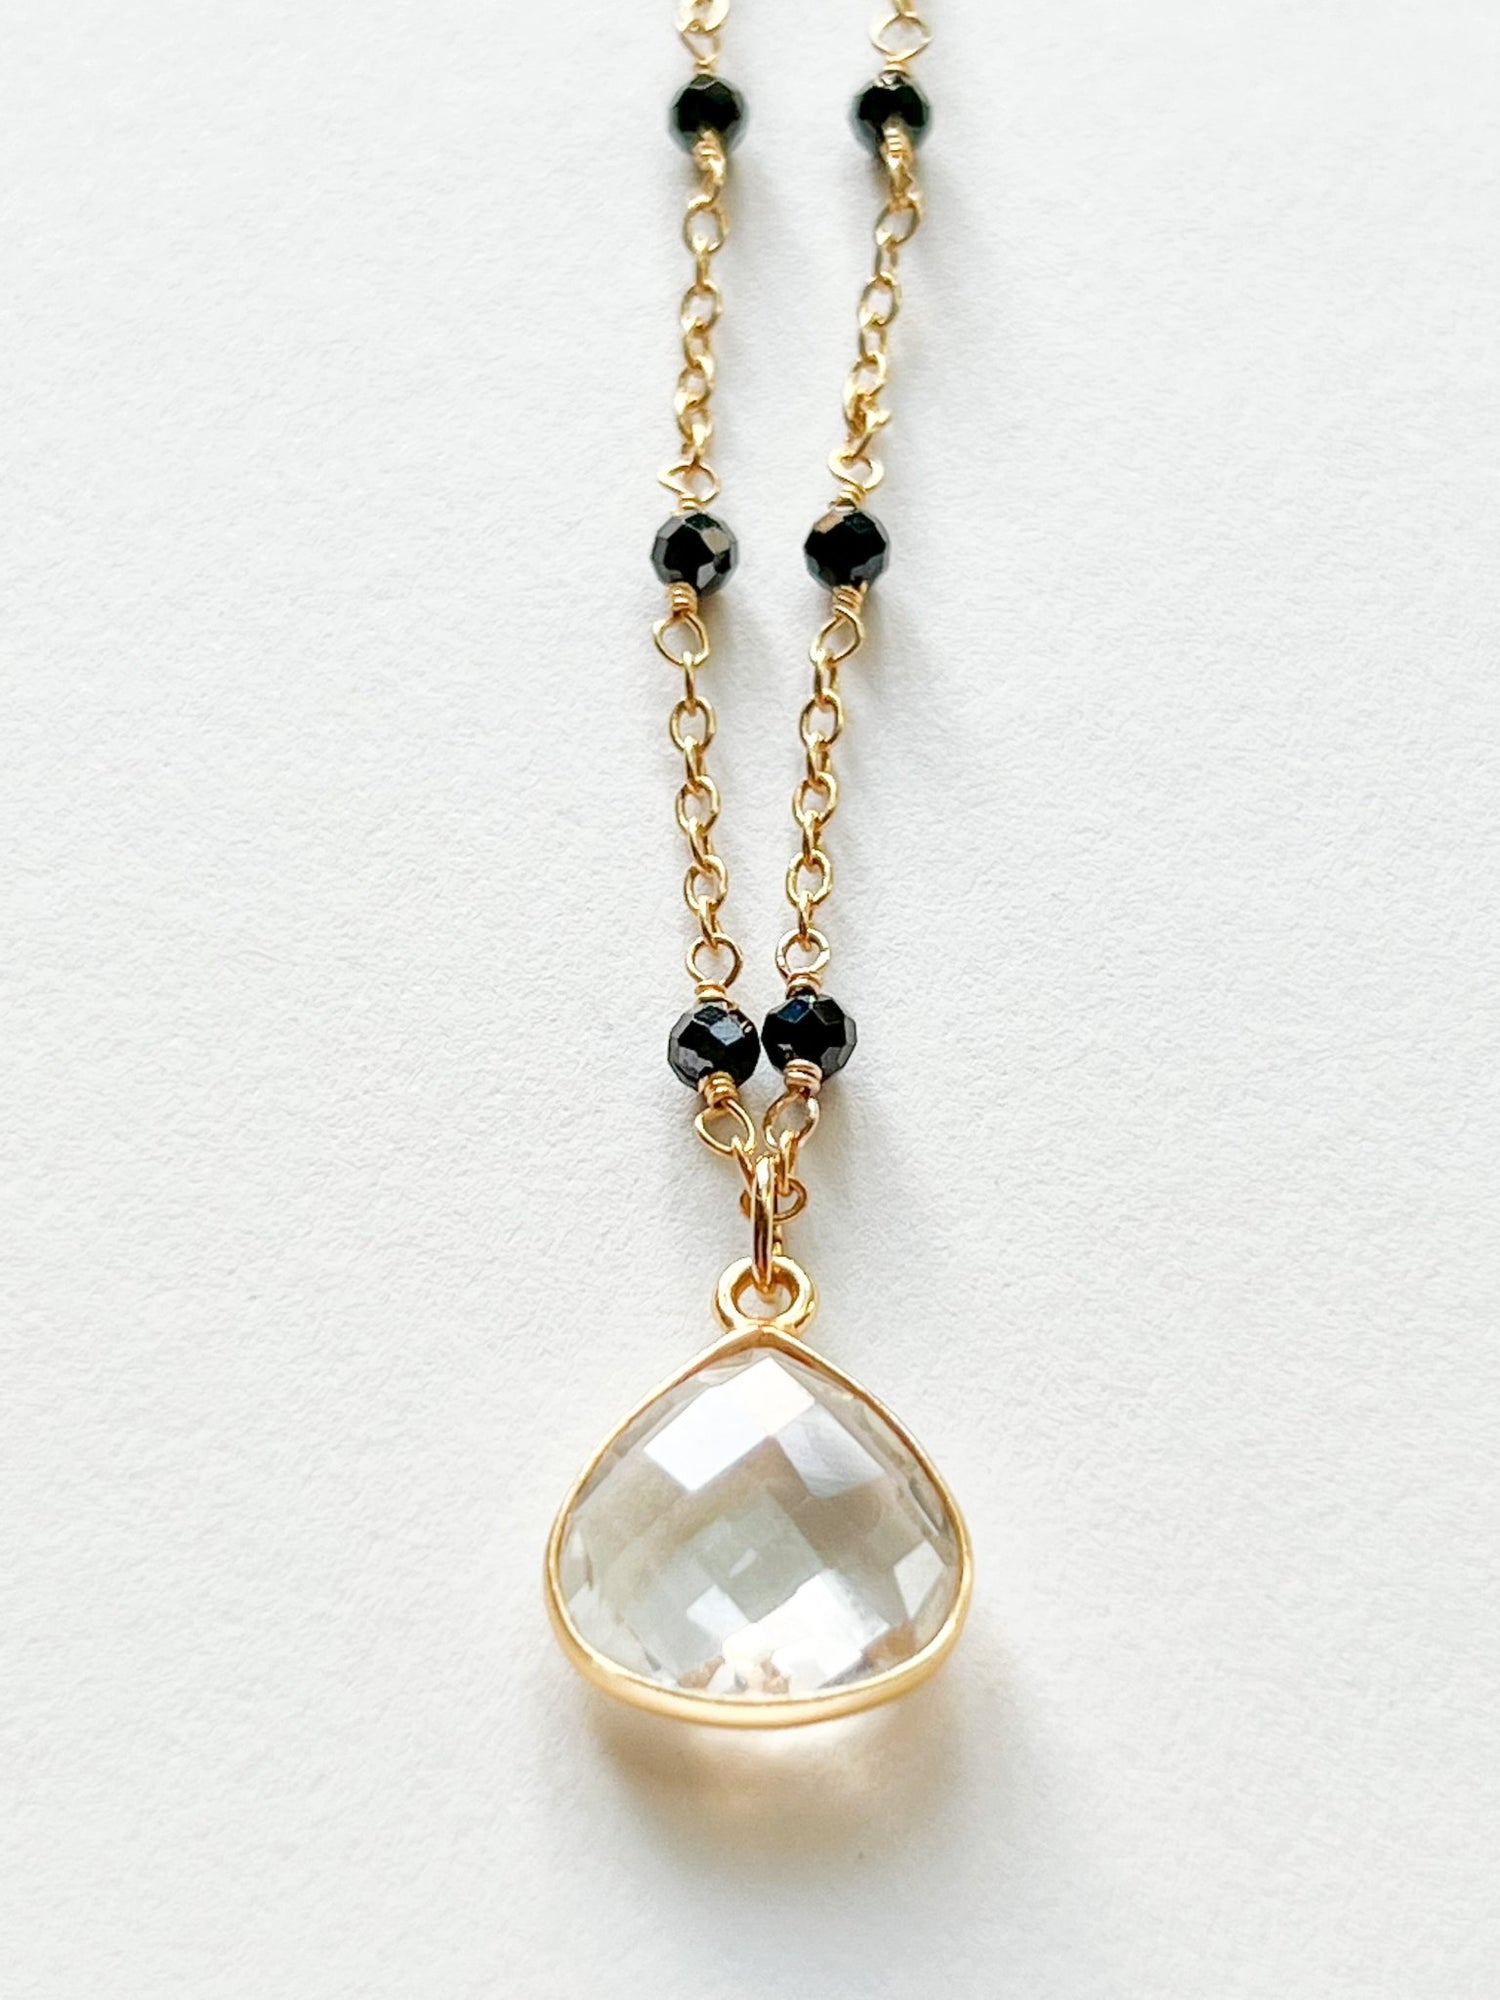 Rock Quartz Teardrop Charm Necklace on Gold Chain with Black Onyx by Sage Machado - The Sage Lifestyle